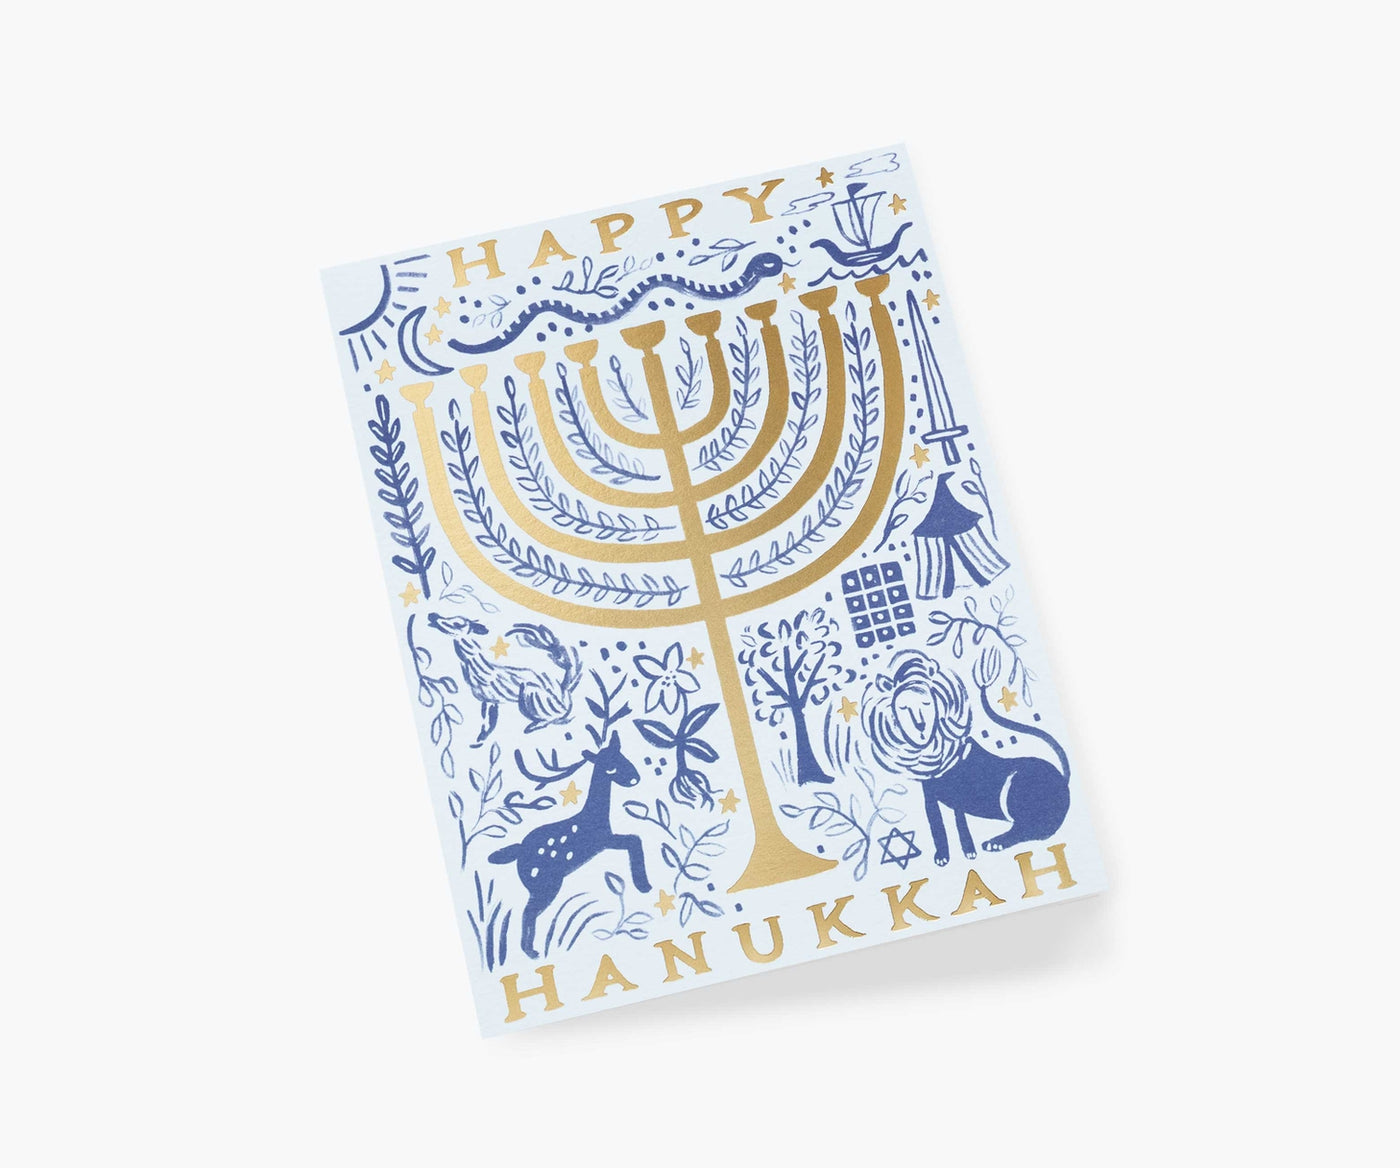 Twelve Tribes Hanukkah Menorah Holiday Card